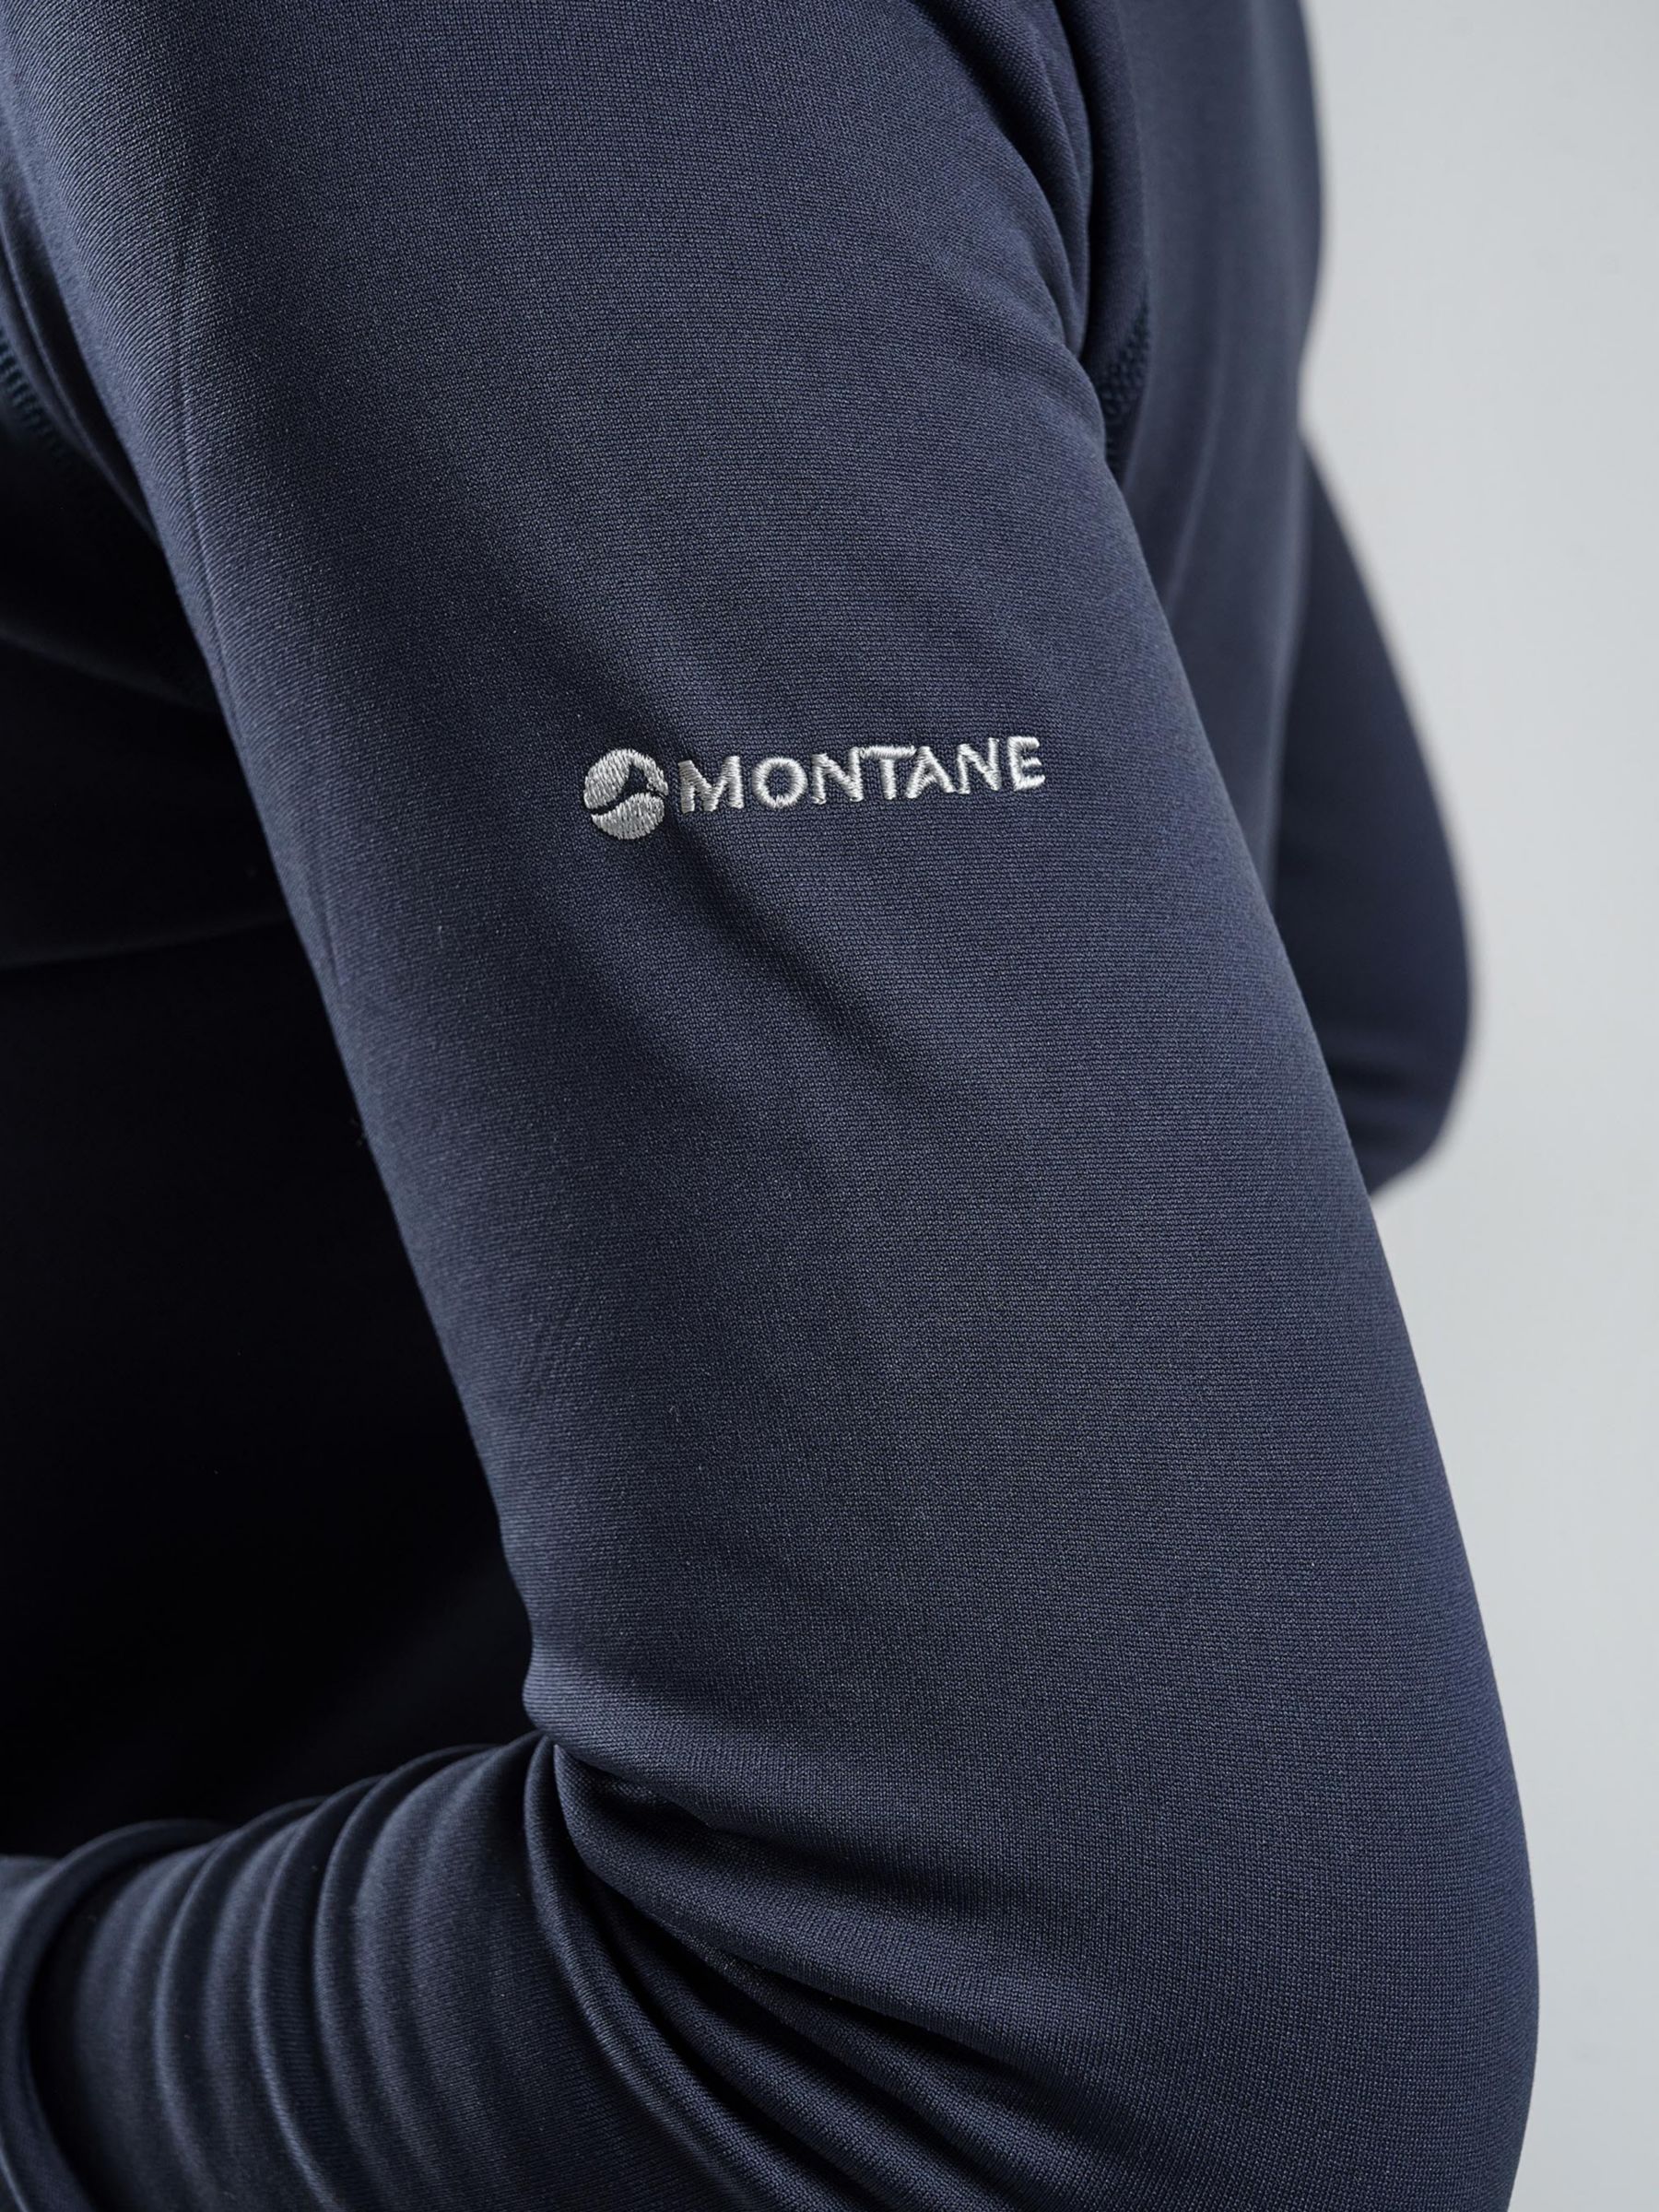 Buy Montane Fury Lite Jacket Online at johnlewis.com